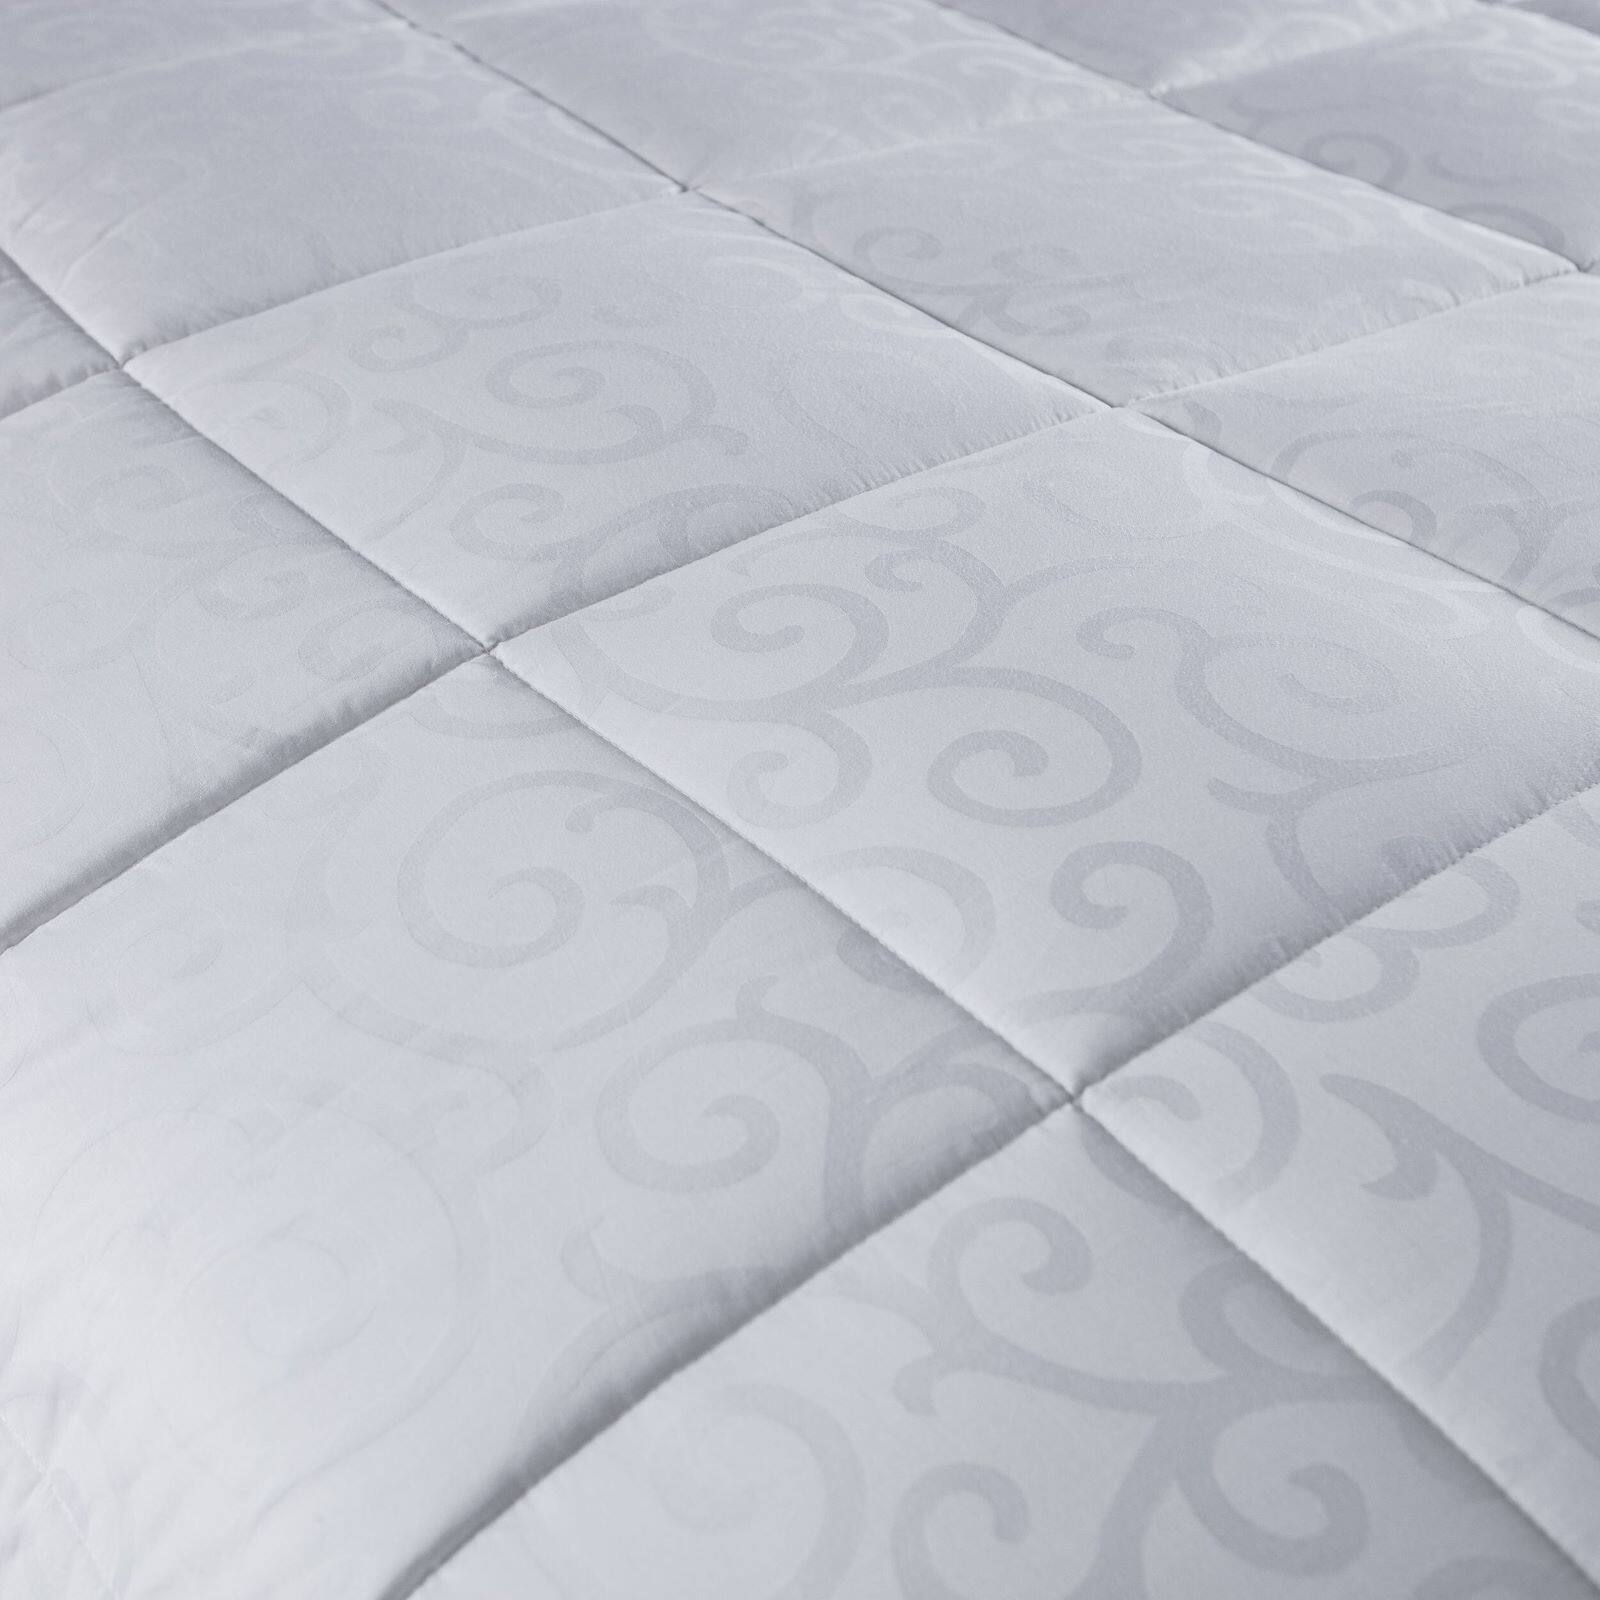 Candice Olson White Luxury Down Alternative Comforter, Queen